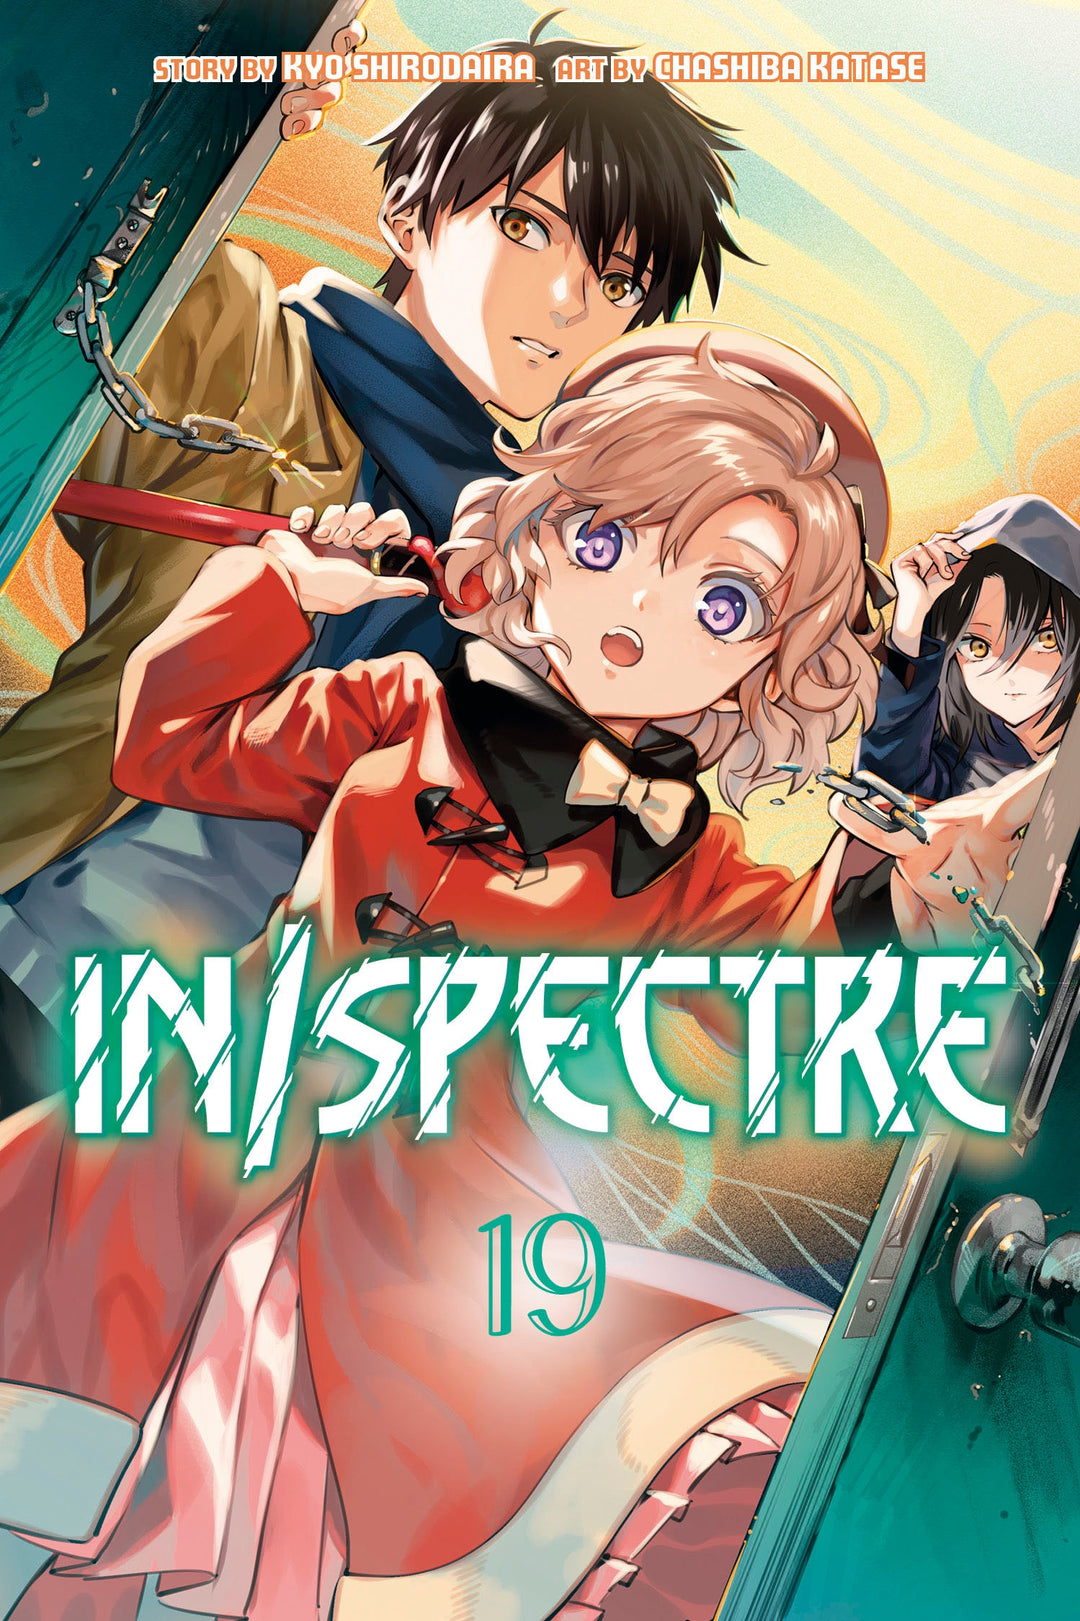 In/Spectre, Vol. 19